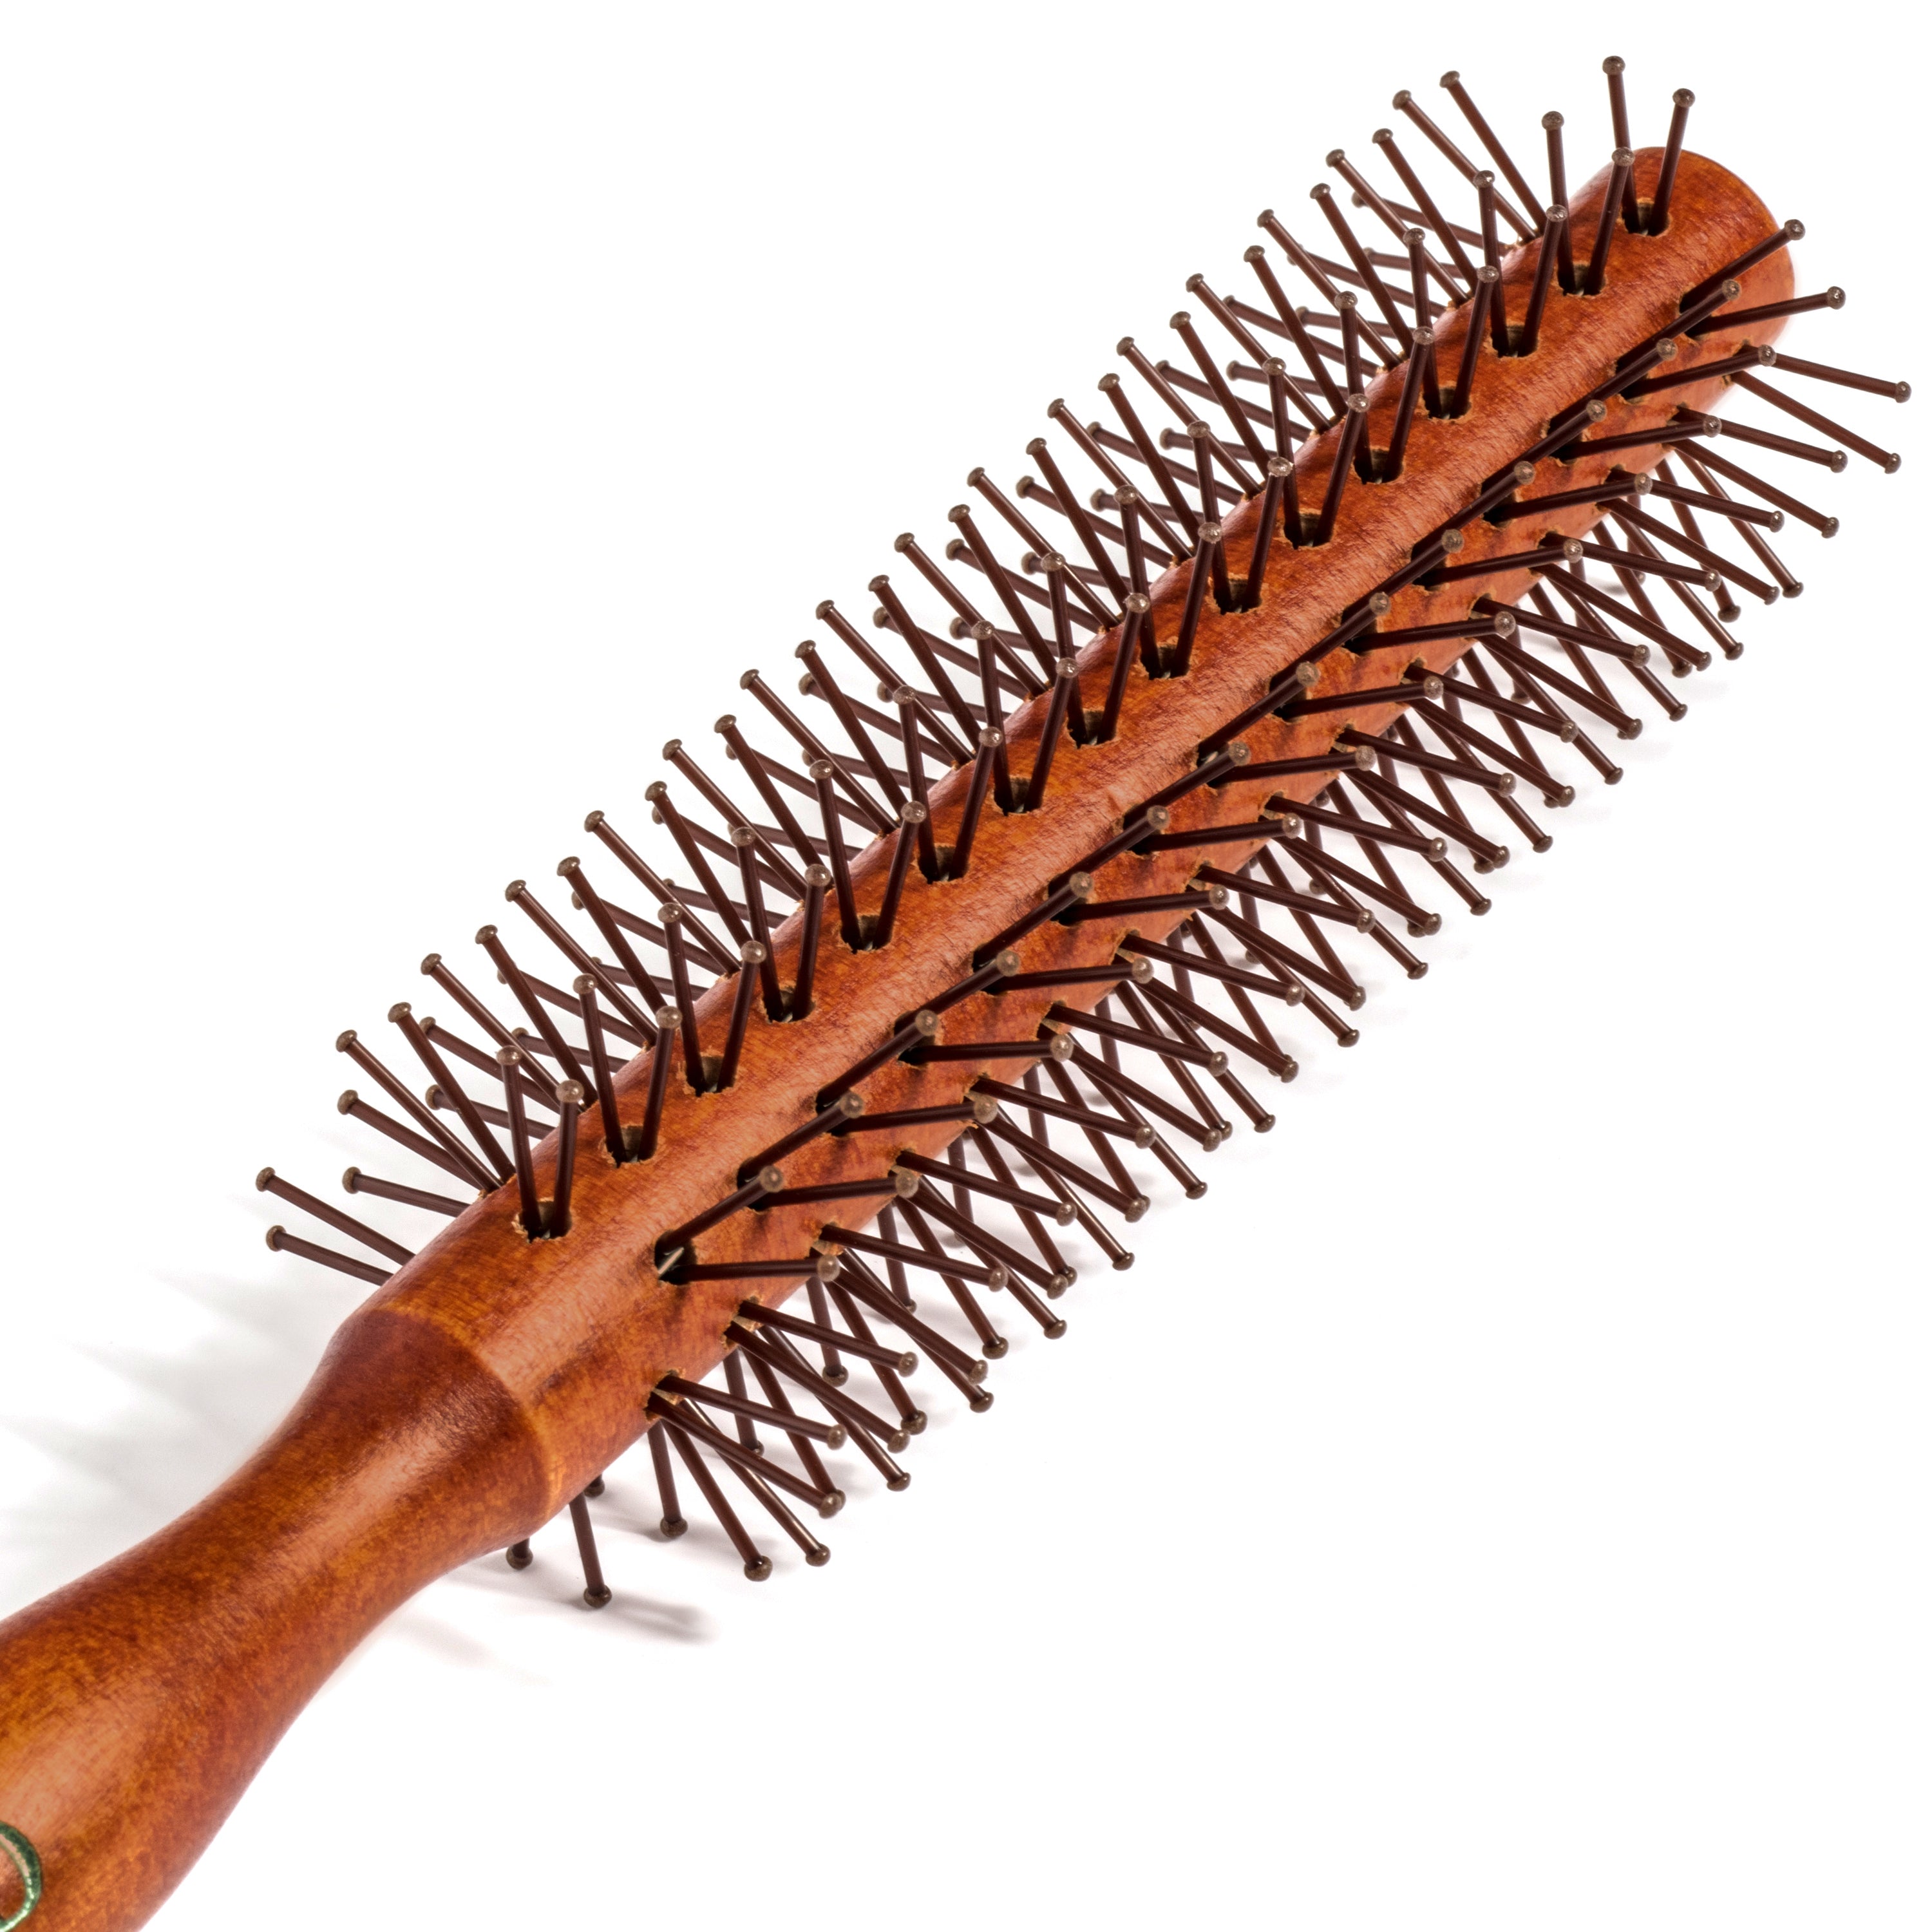 Grannaturals Boar Bristle Hair Brush for Women and Men - Natural Wooden